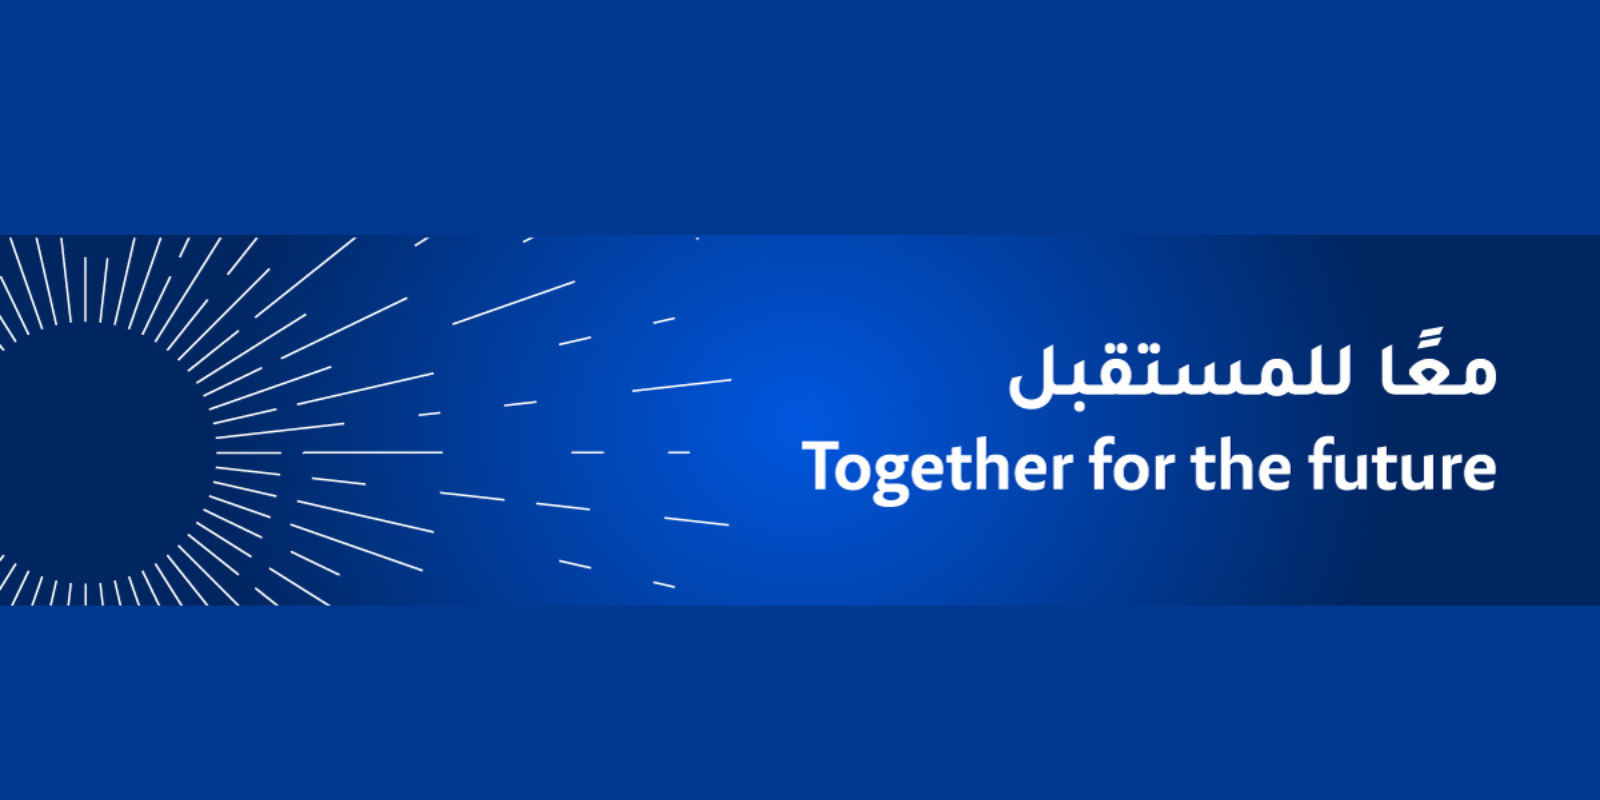 Partnership with Khalifa University’s RIC2D